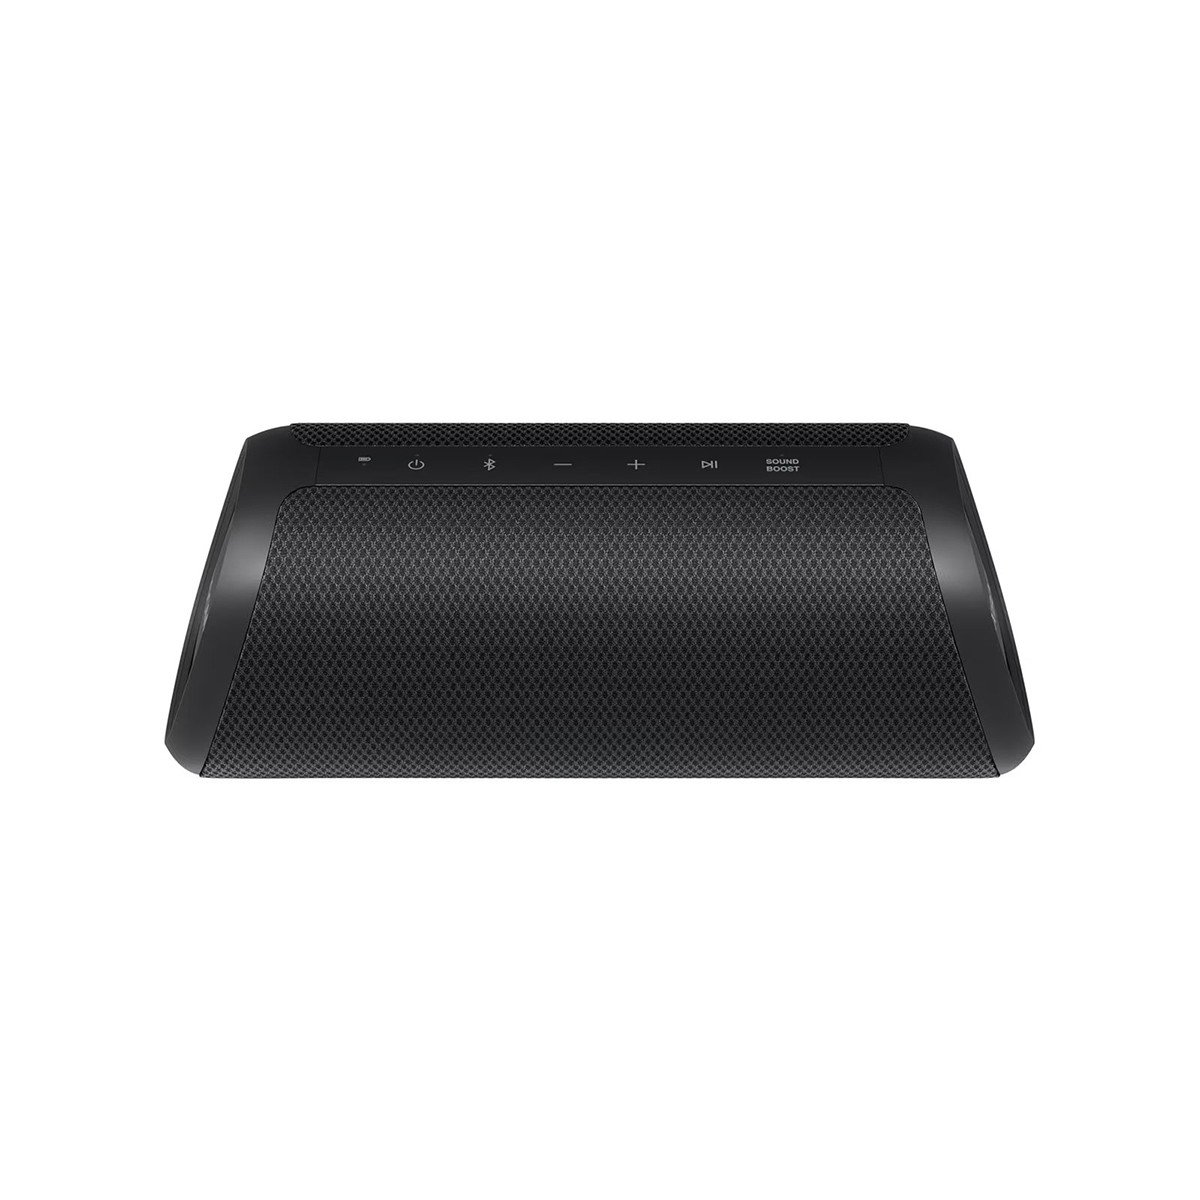 LG XBOOM Go Portable Bluetooth Speaker, Black - XG7QBK